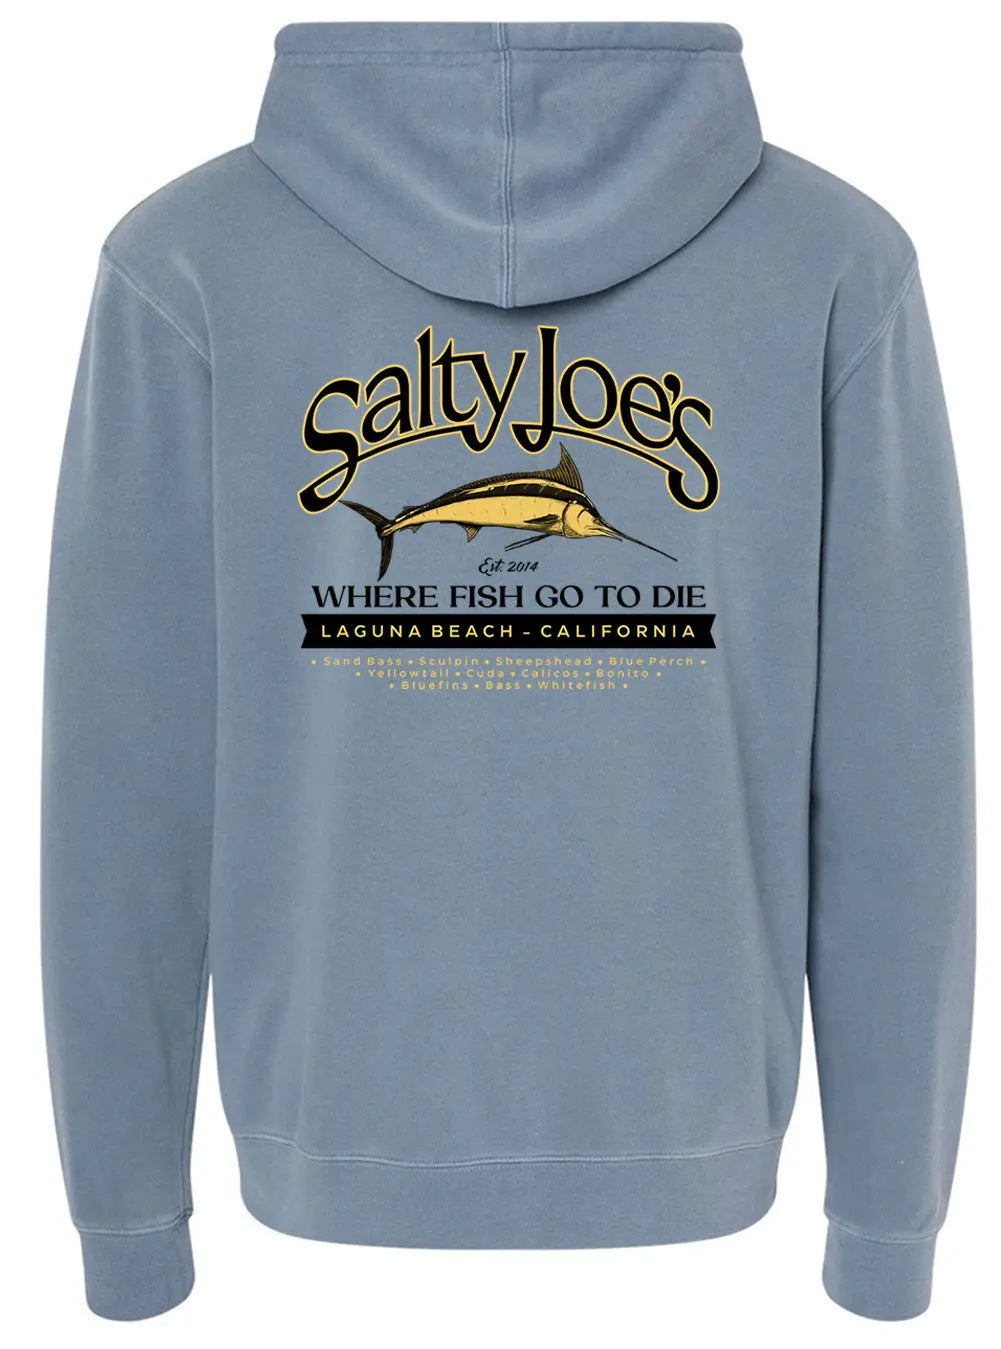 Salty Joe's Fish Count Pigment-Dyed Hoodie